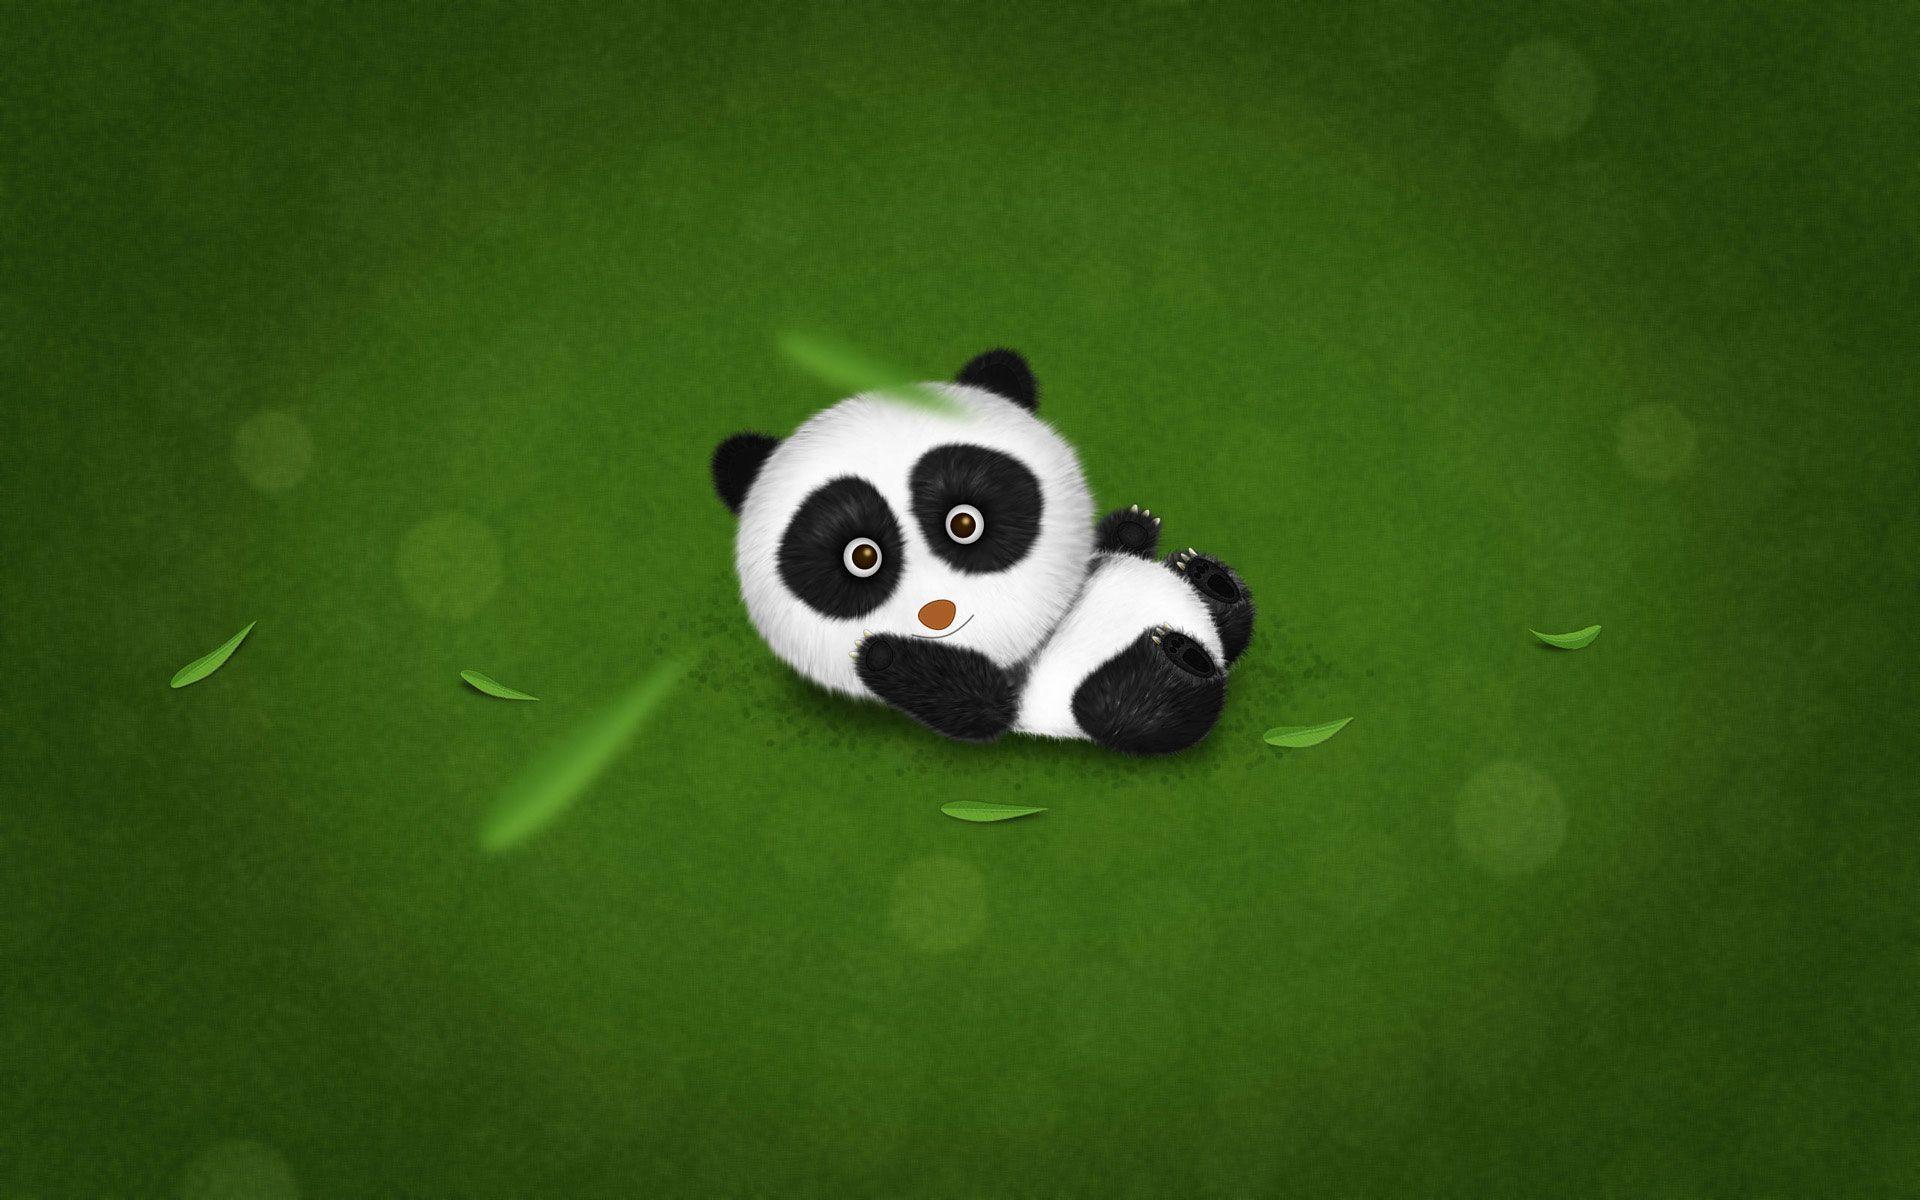 Cute Panda Cartoon Wallpaper HD Image Amp Pictures Becuo